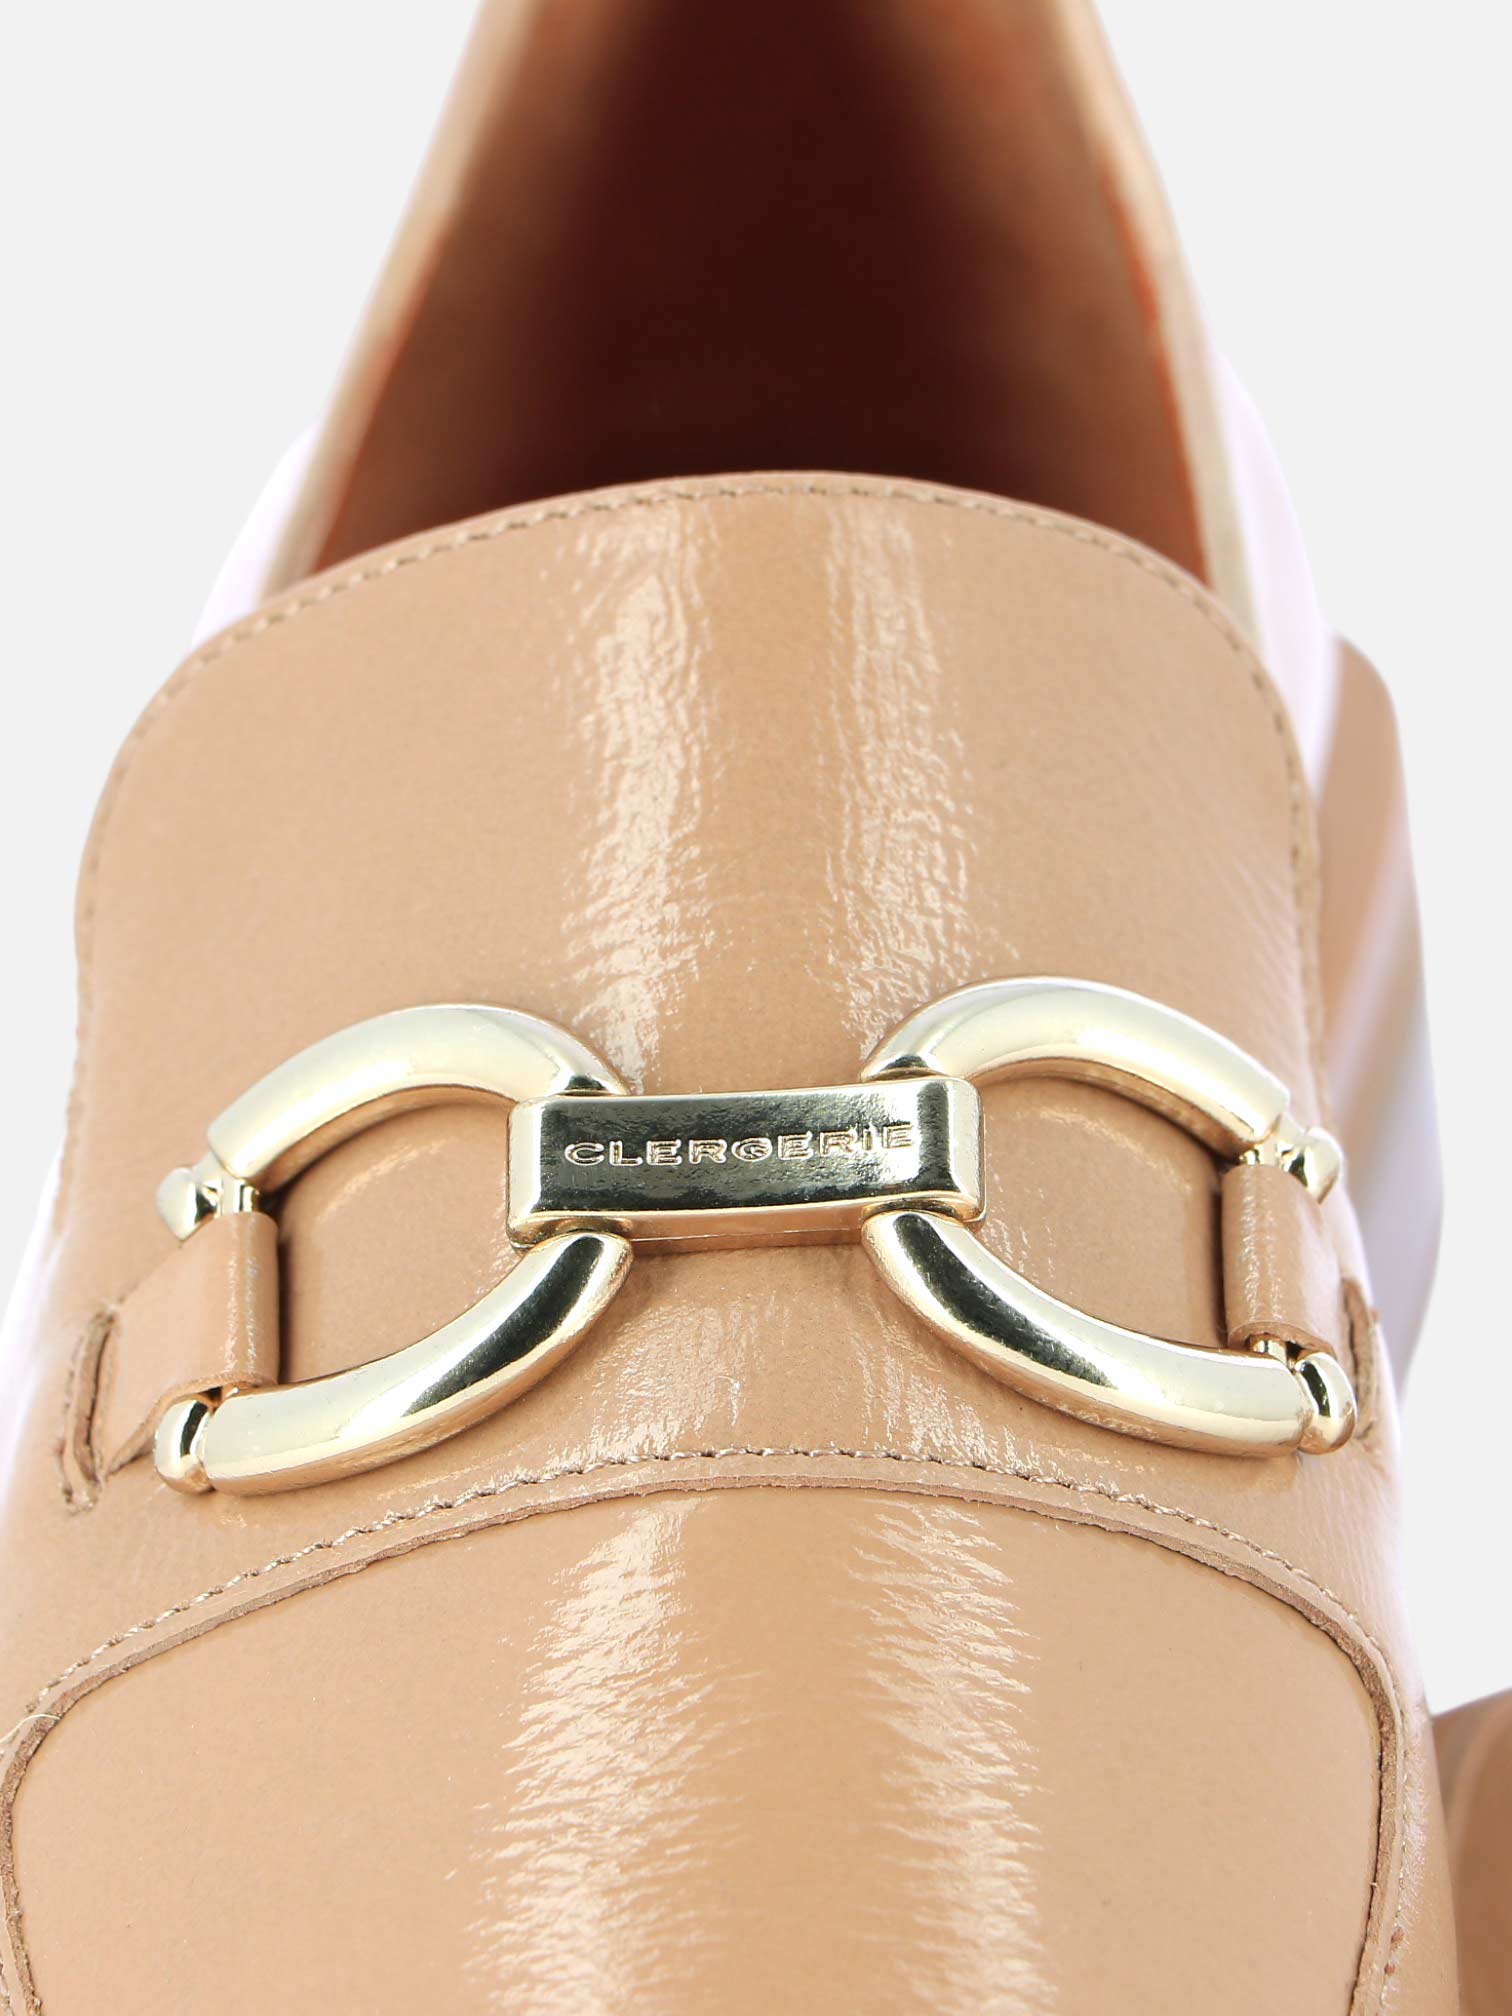 LOAFERS - BUMPER loafers, varnished goatskin beige - 3606063772310 - Clergerie Paris - Europe